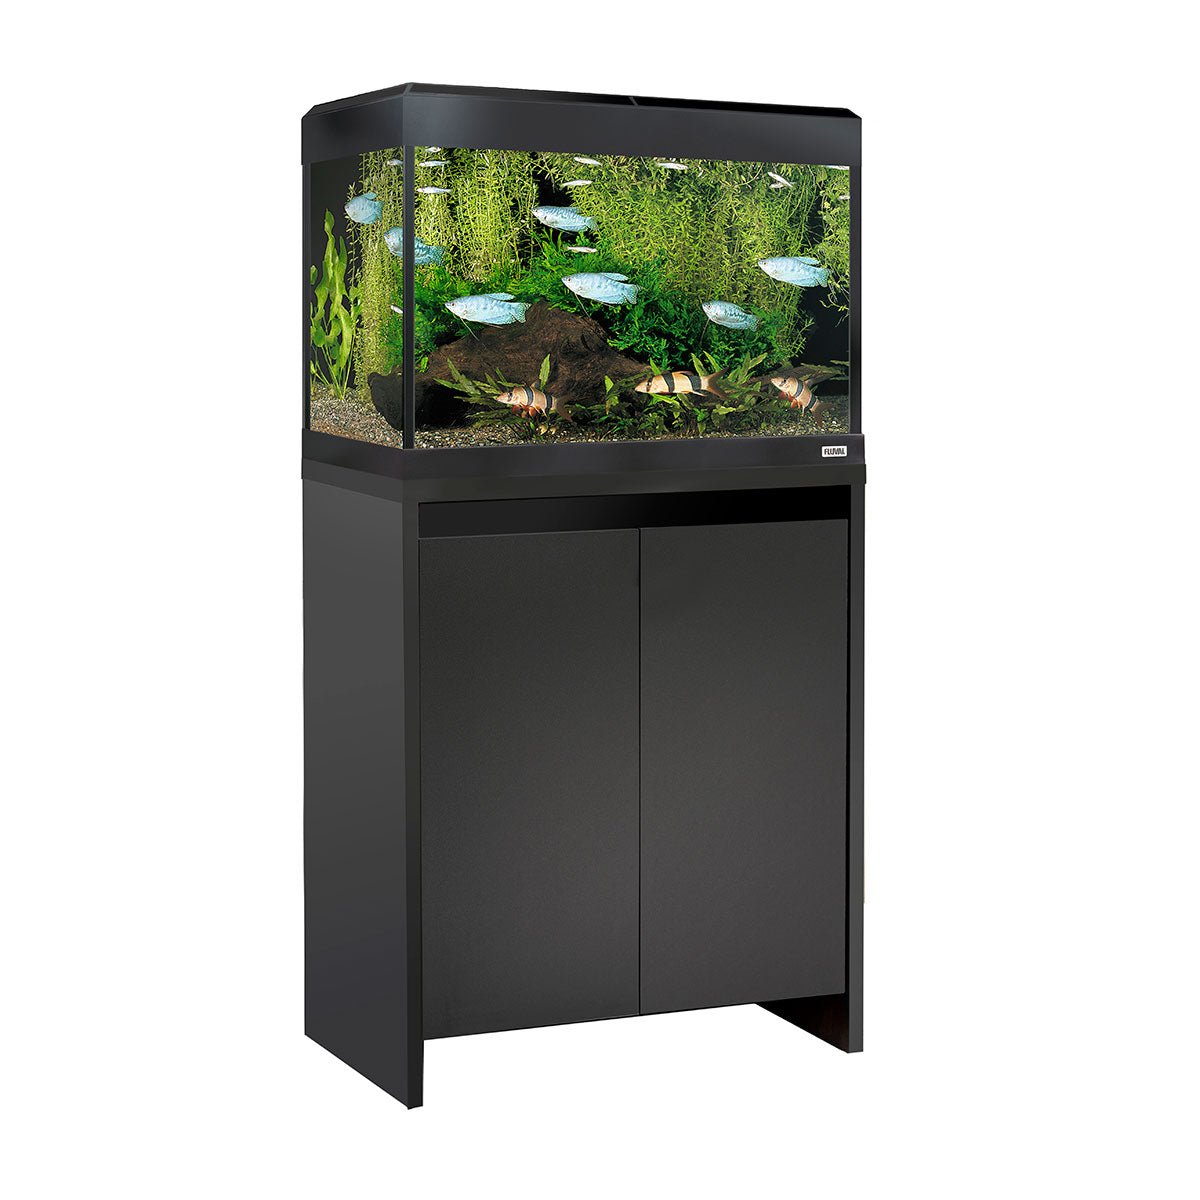 Fluval Roma Bluetooth LED 90 Aquarium and Cabinet - Black - Charterhouse Aquatics